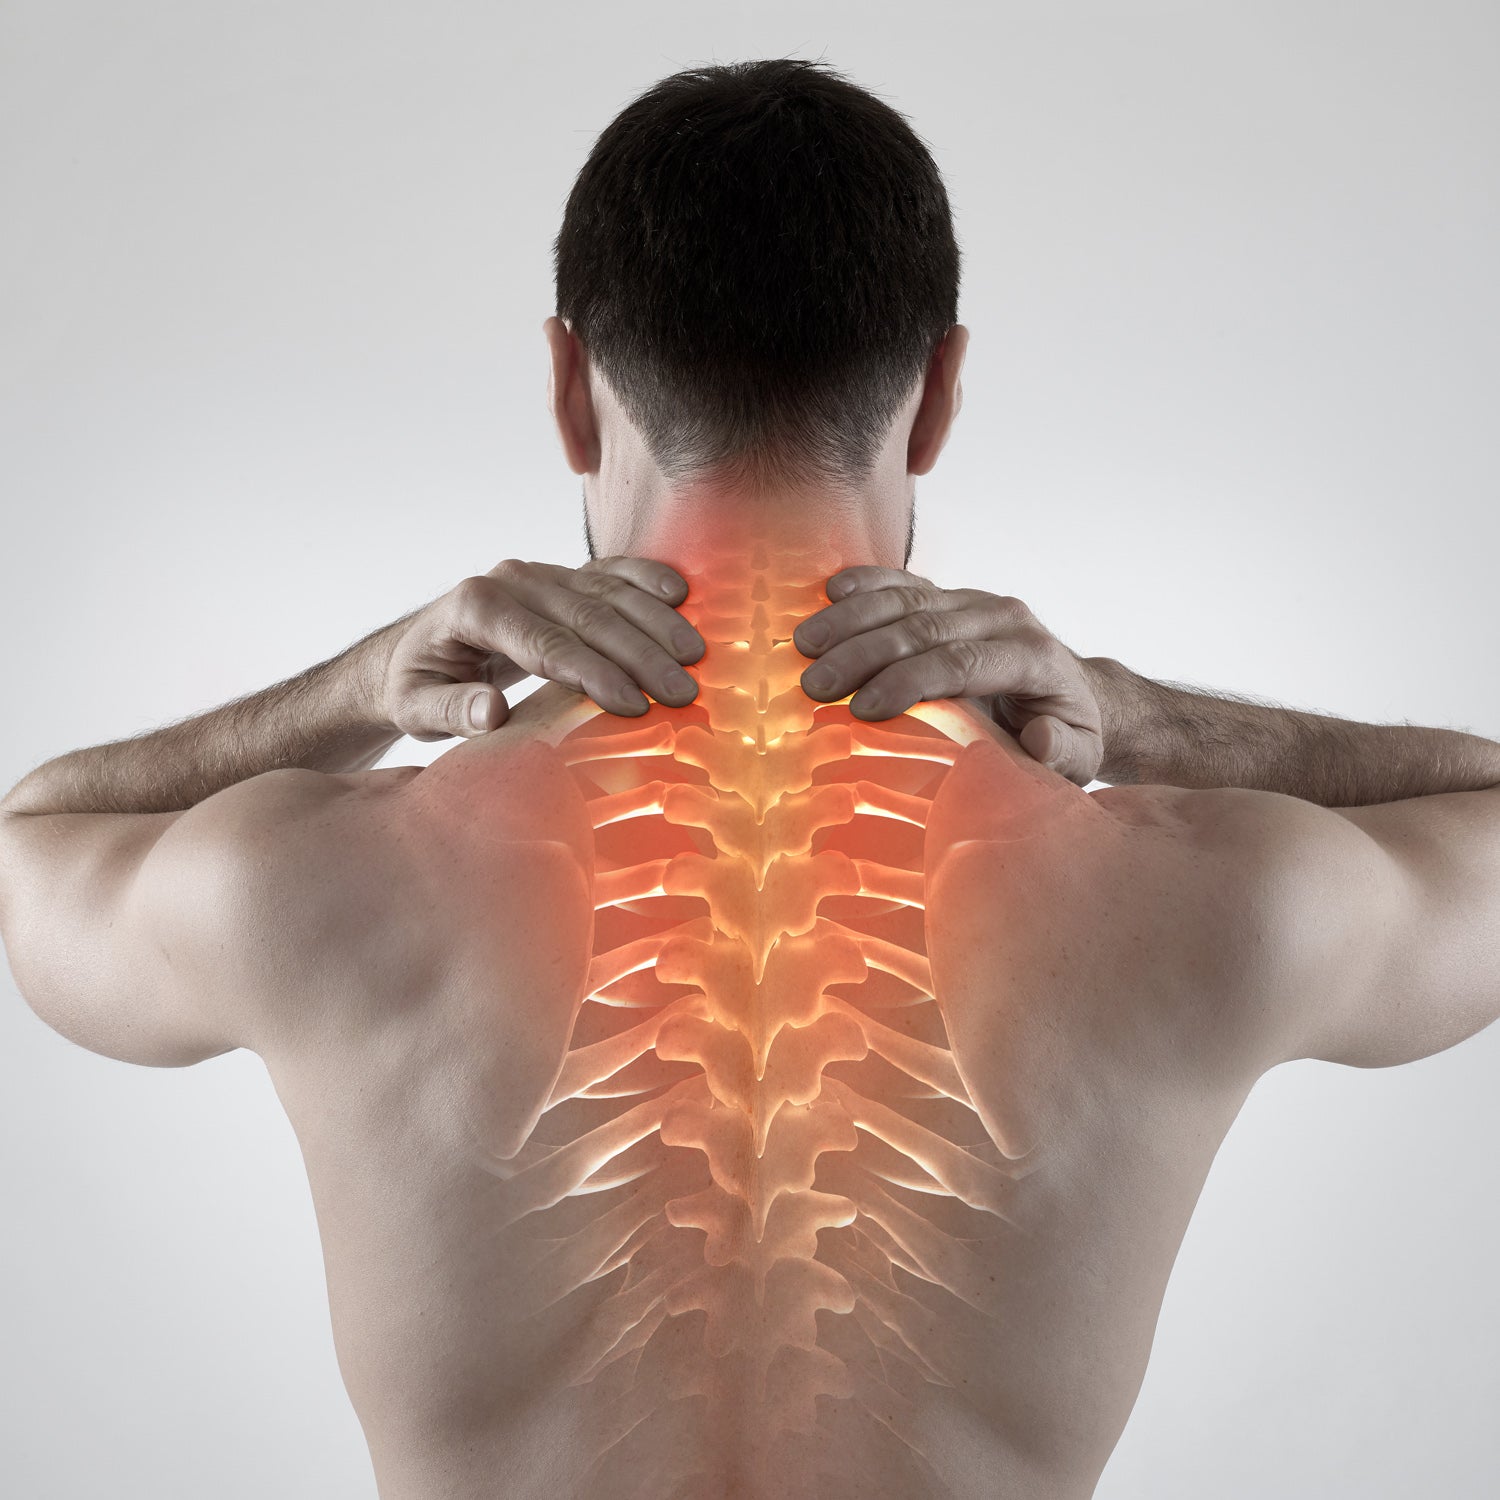 5 Ways Athletes Can Avoid Back Pain